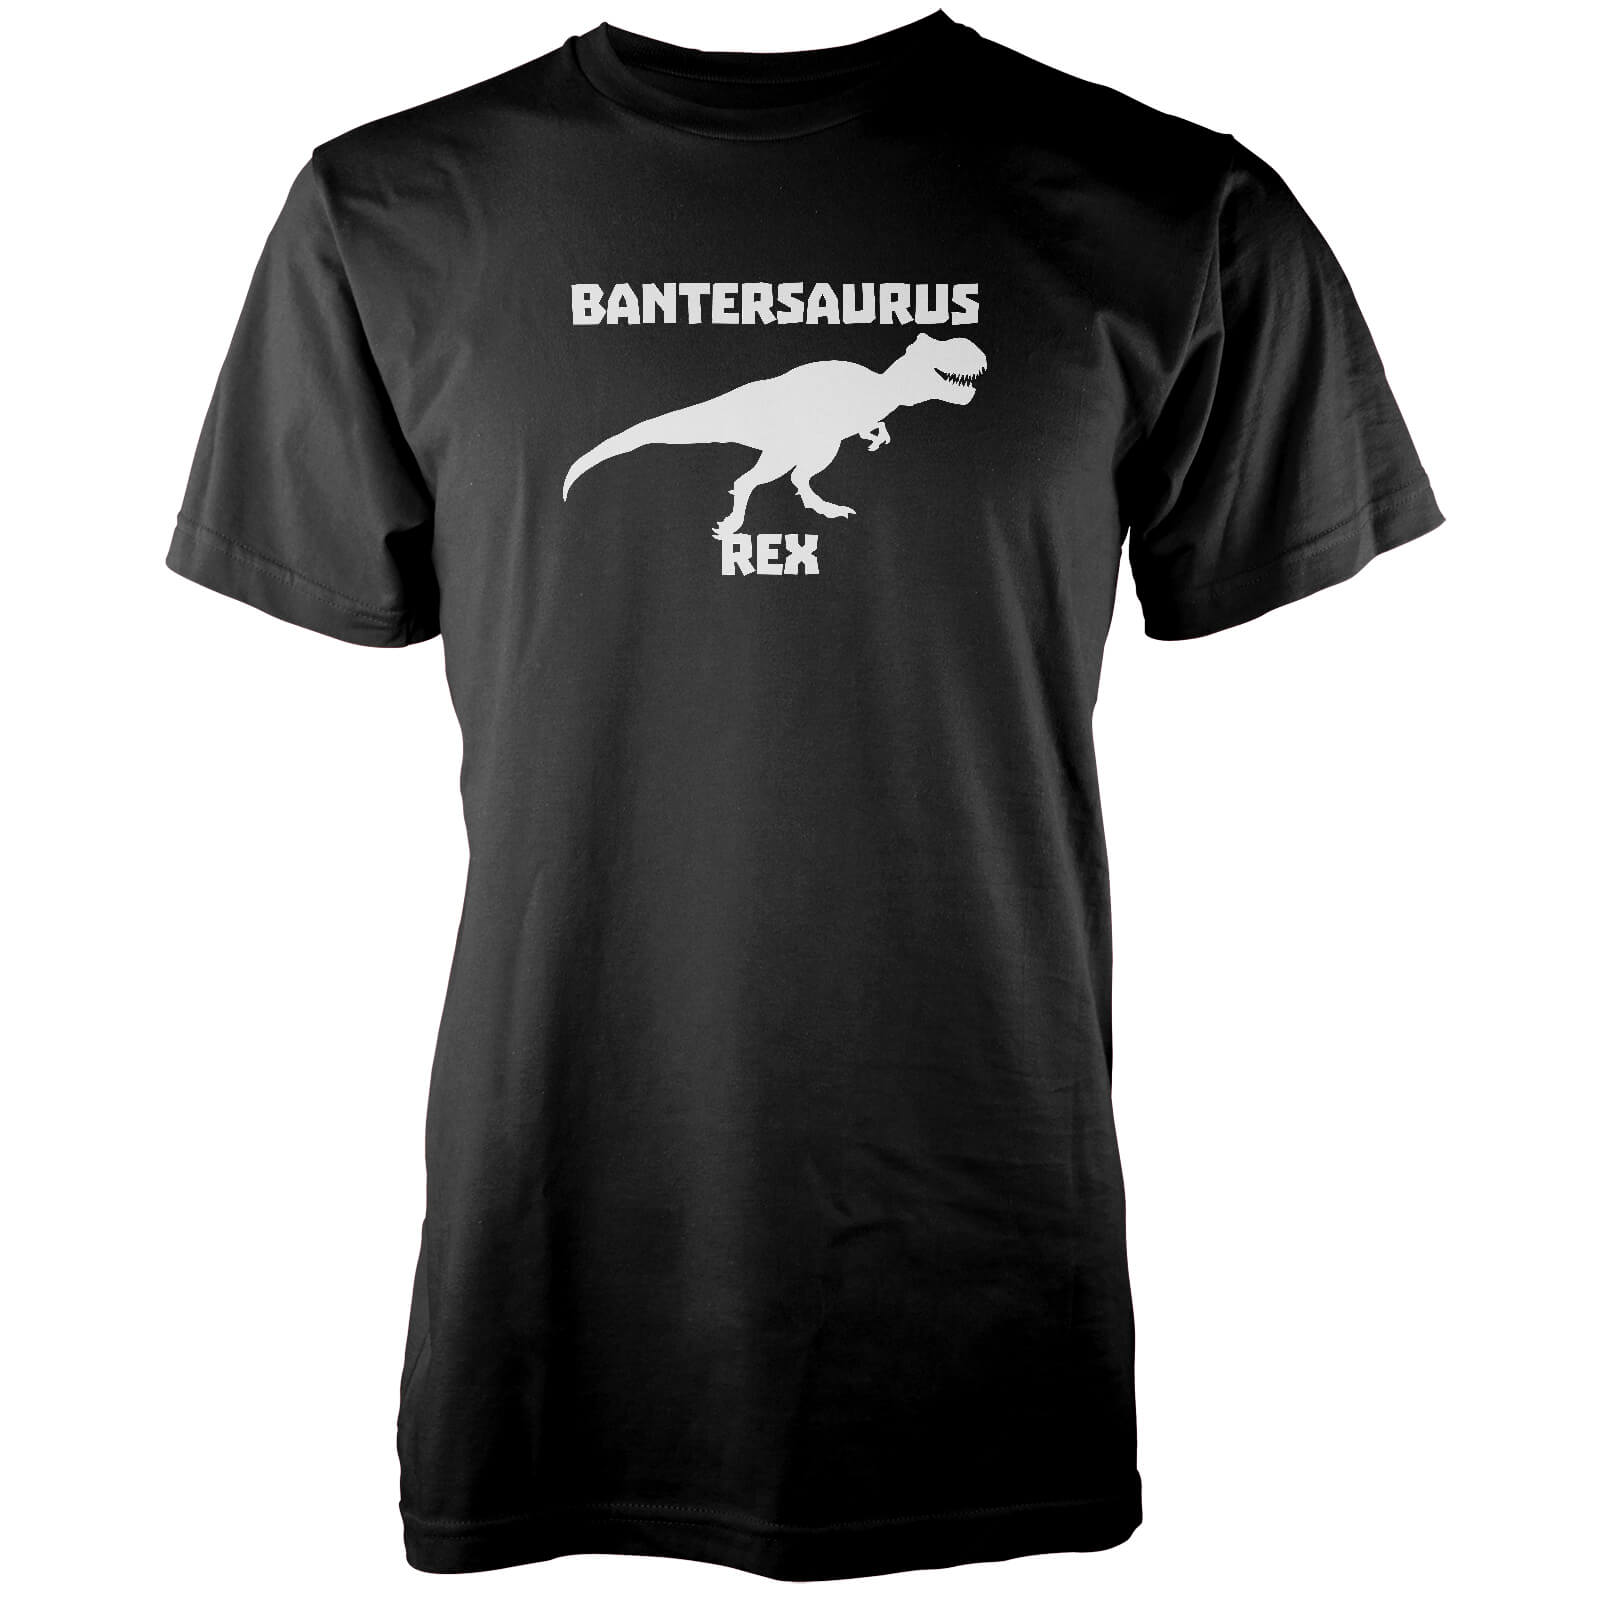 Bantersaurus Rex Black T-Shirt - S - Black